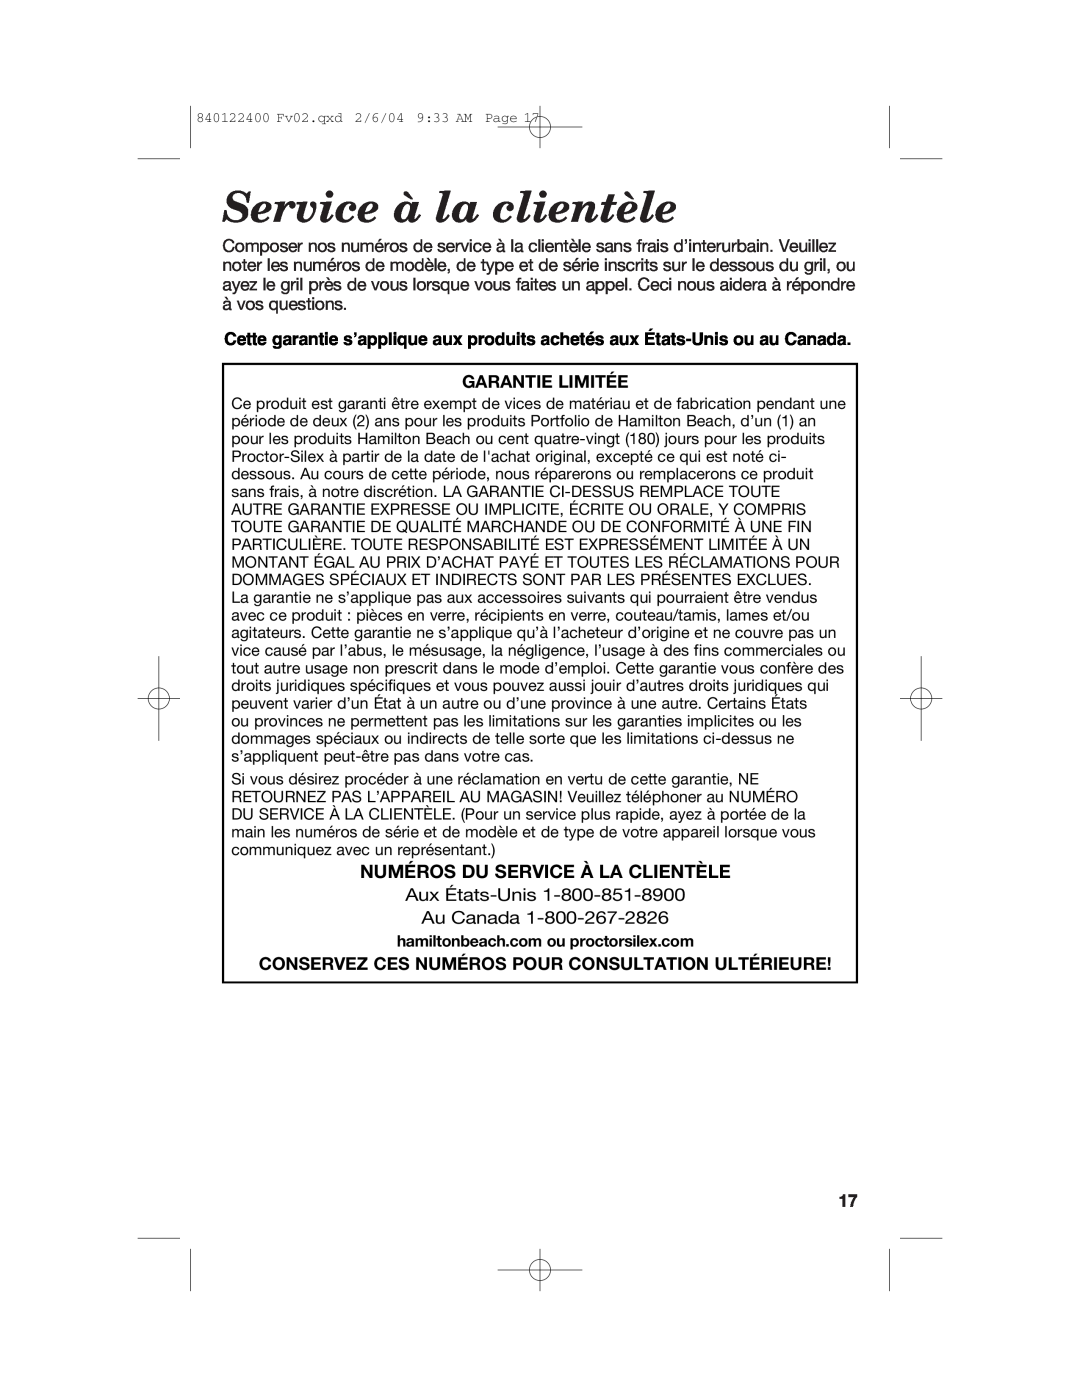 Hamilton Beach 25326C manual Service à la clientèle, Numéros Du Service À La Clientèle, Garantie Limitée 